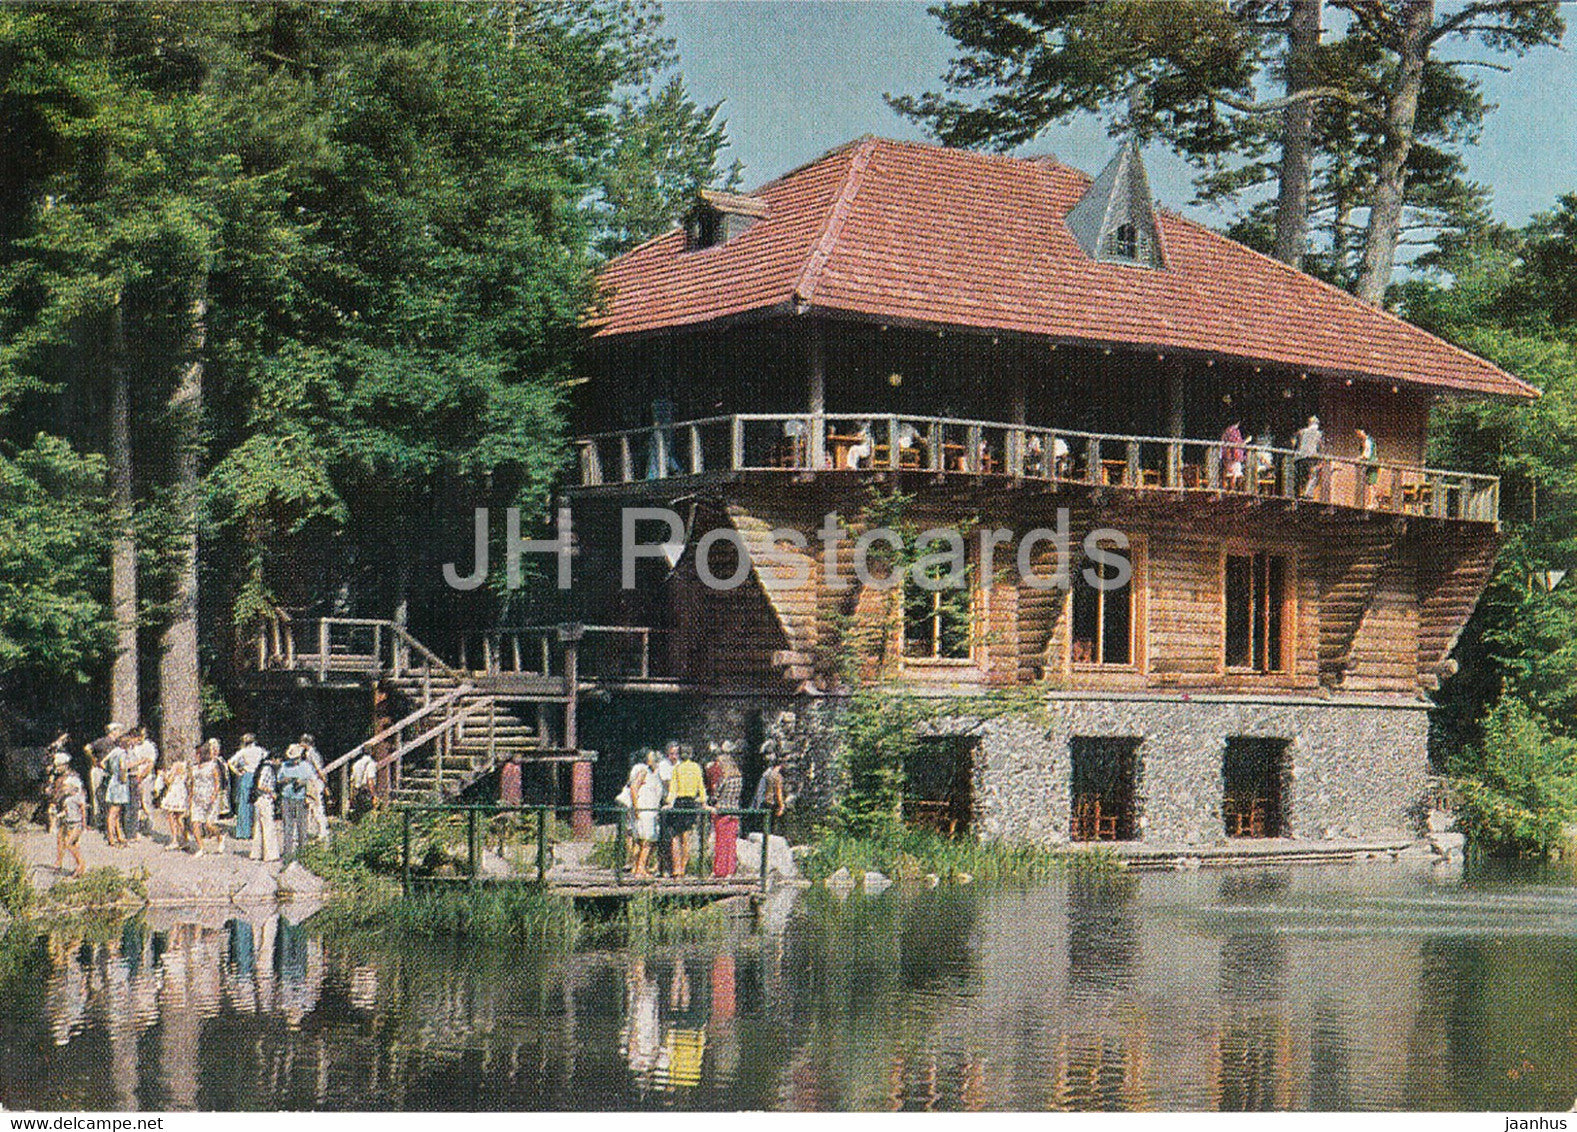 Crimea - Yalta - restaurant Lesnoy - AVIA - postal stationery - 1975 - Ukraine USSR - unused - JH Postcards